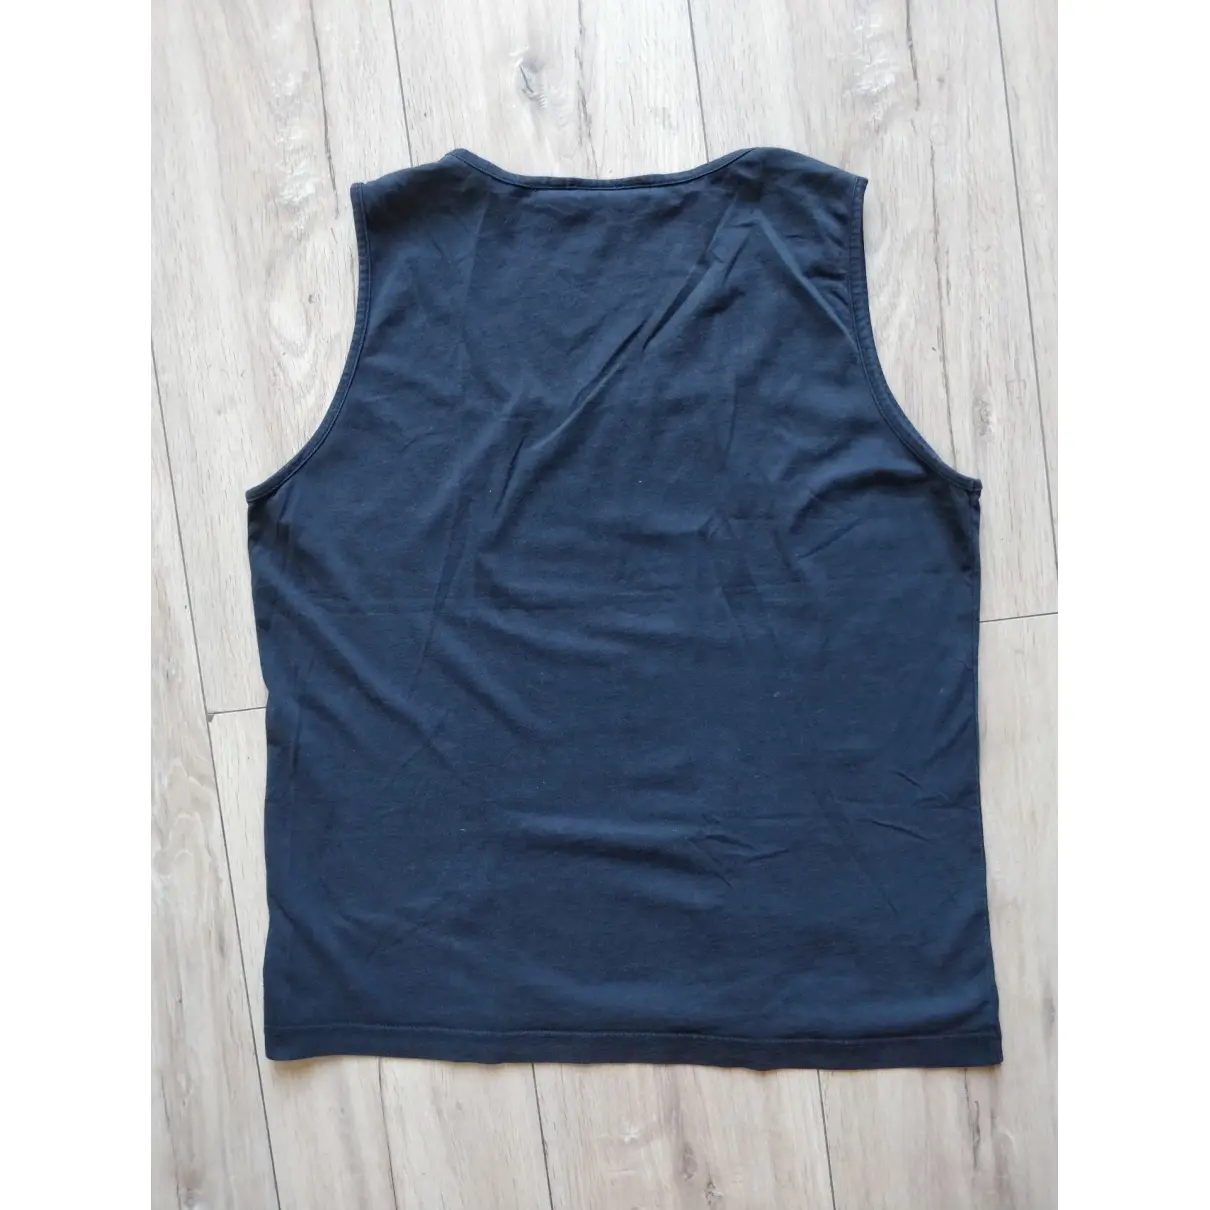 Pierre Cardin Vest for sale - Vintage